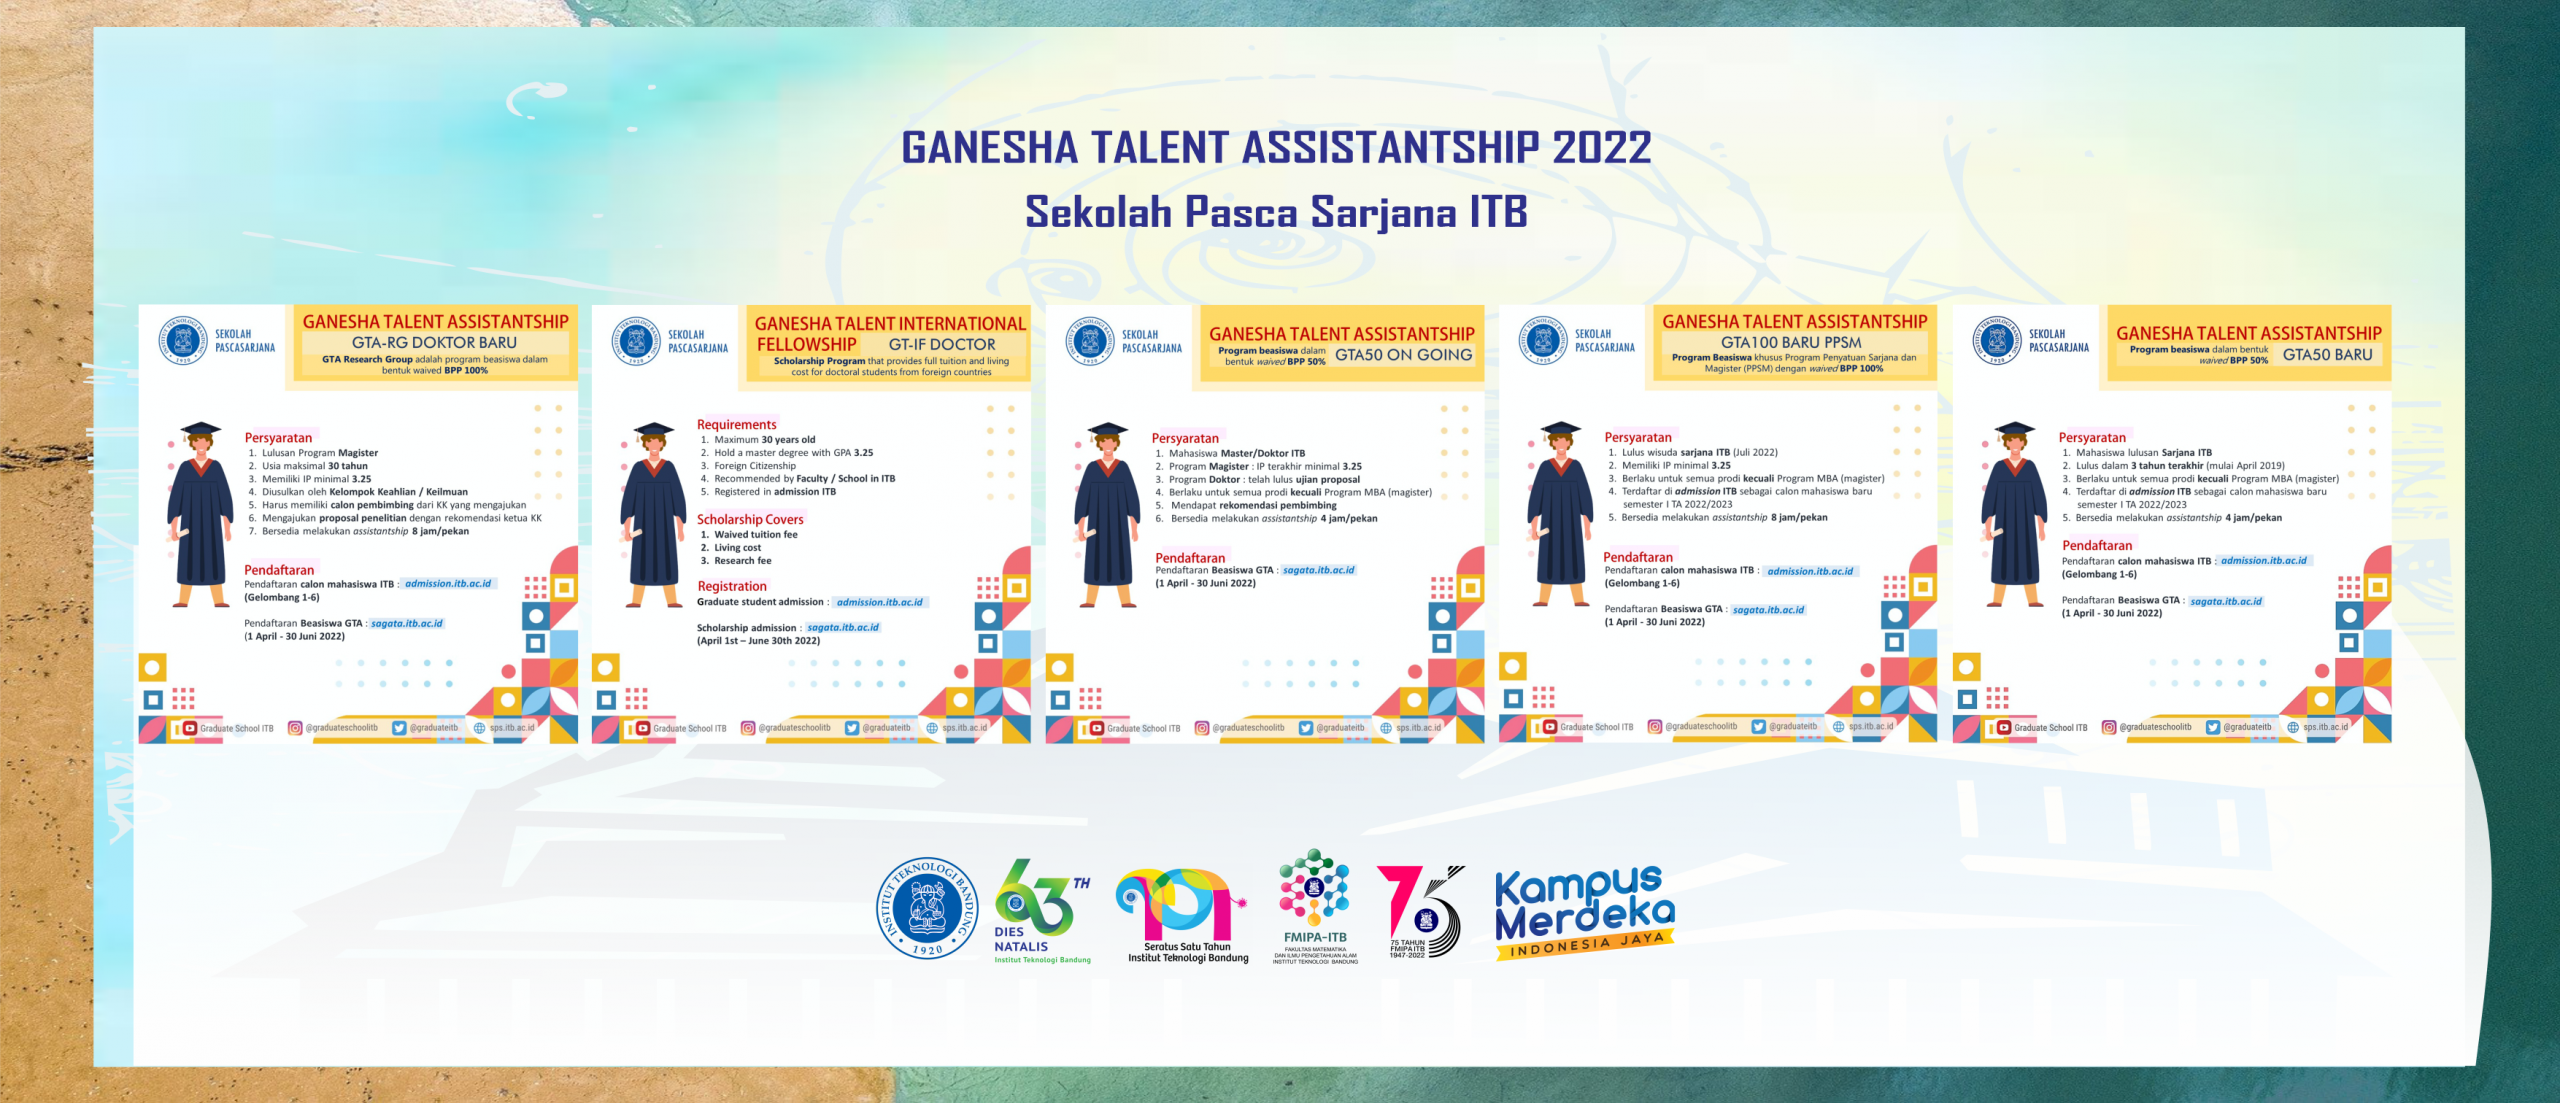 Ganesha Talent Assistantship 2022